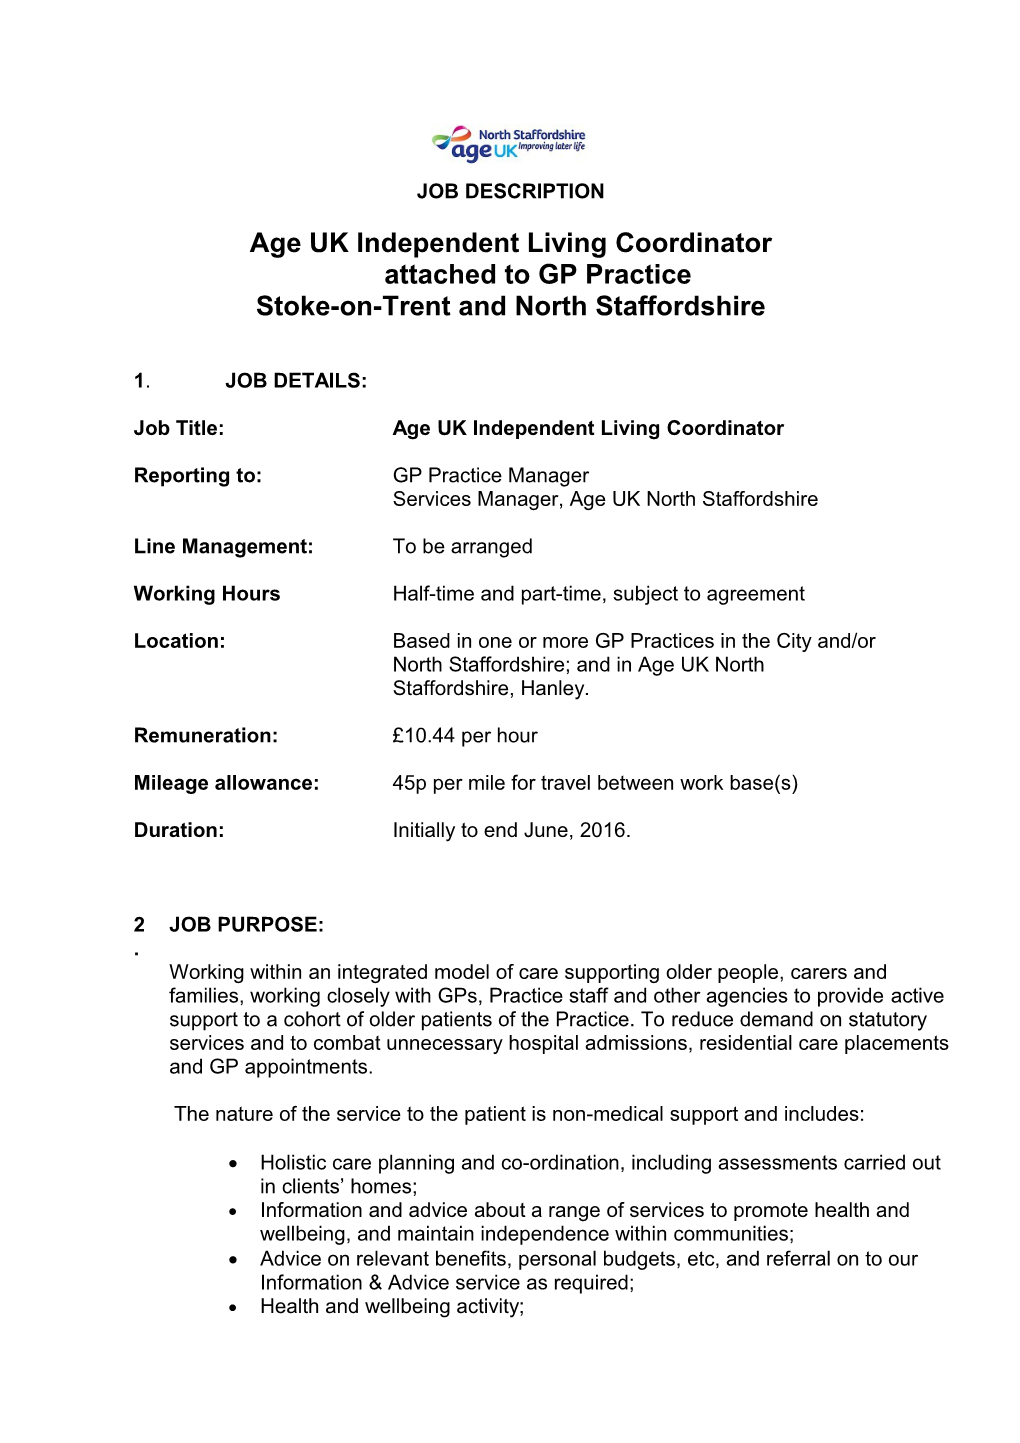 Age Ukindependent Living Coordinator